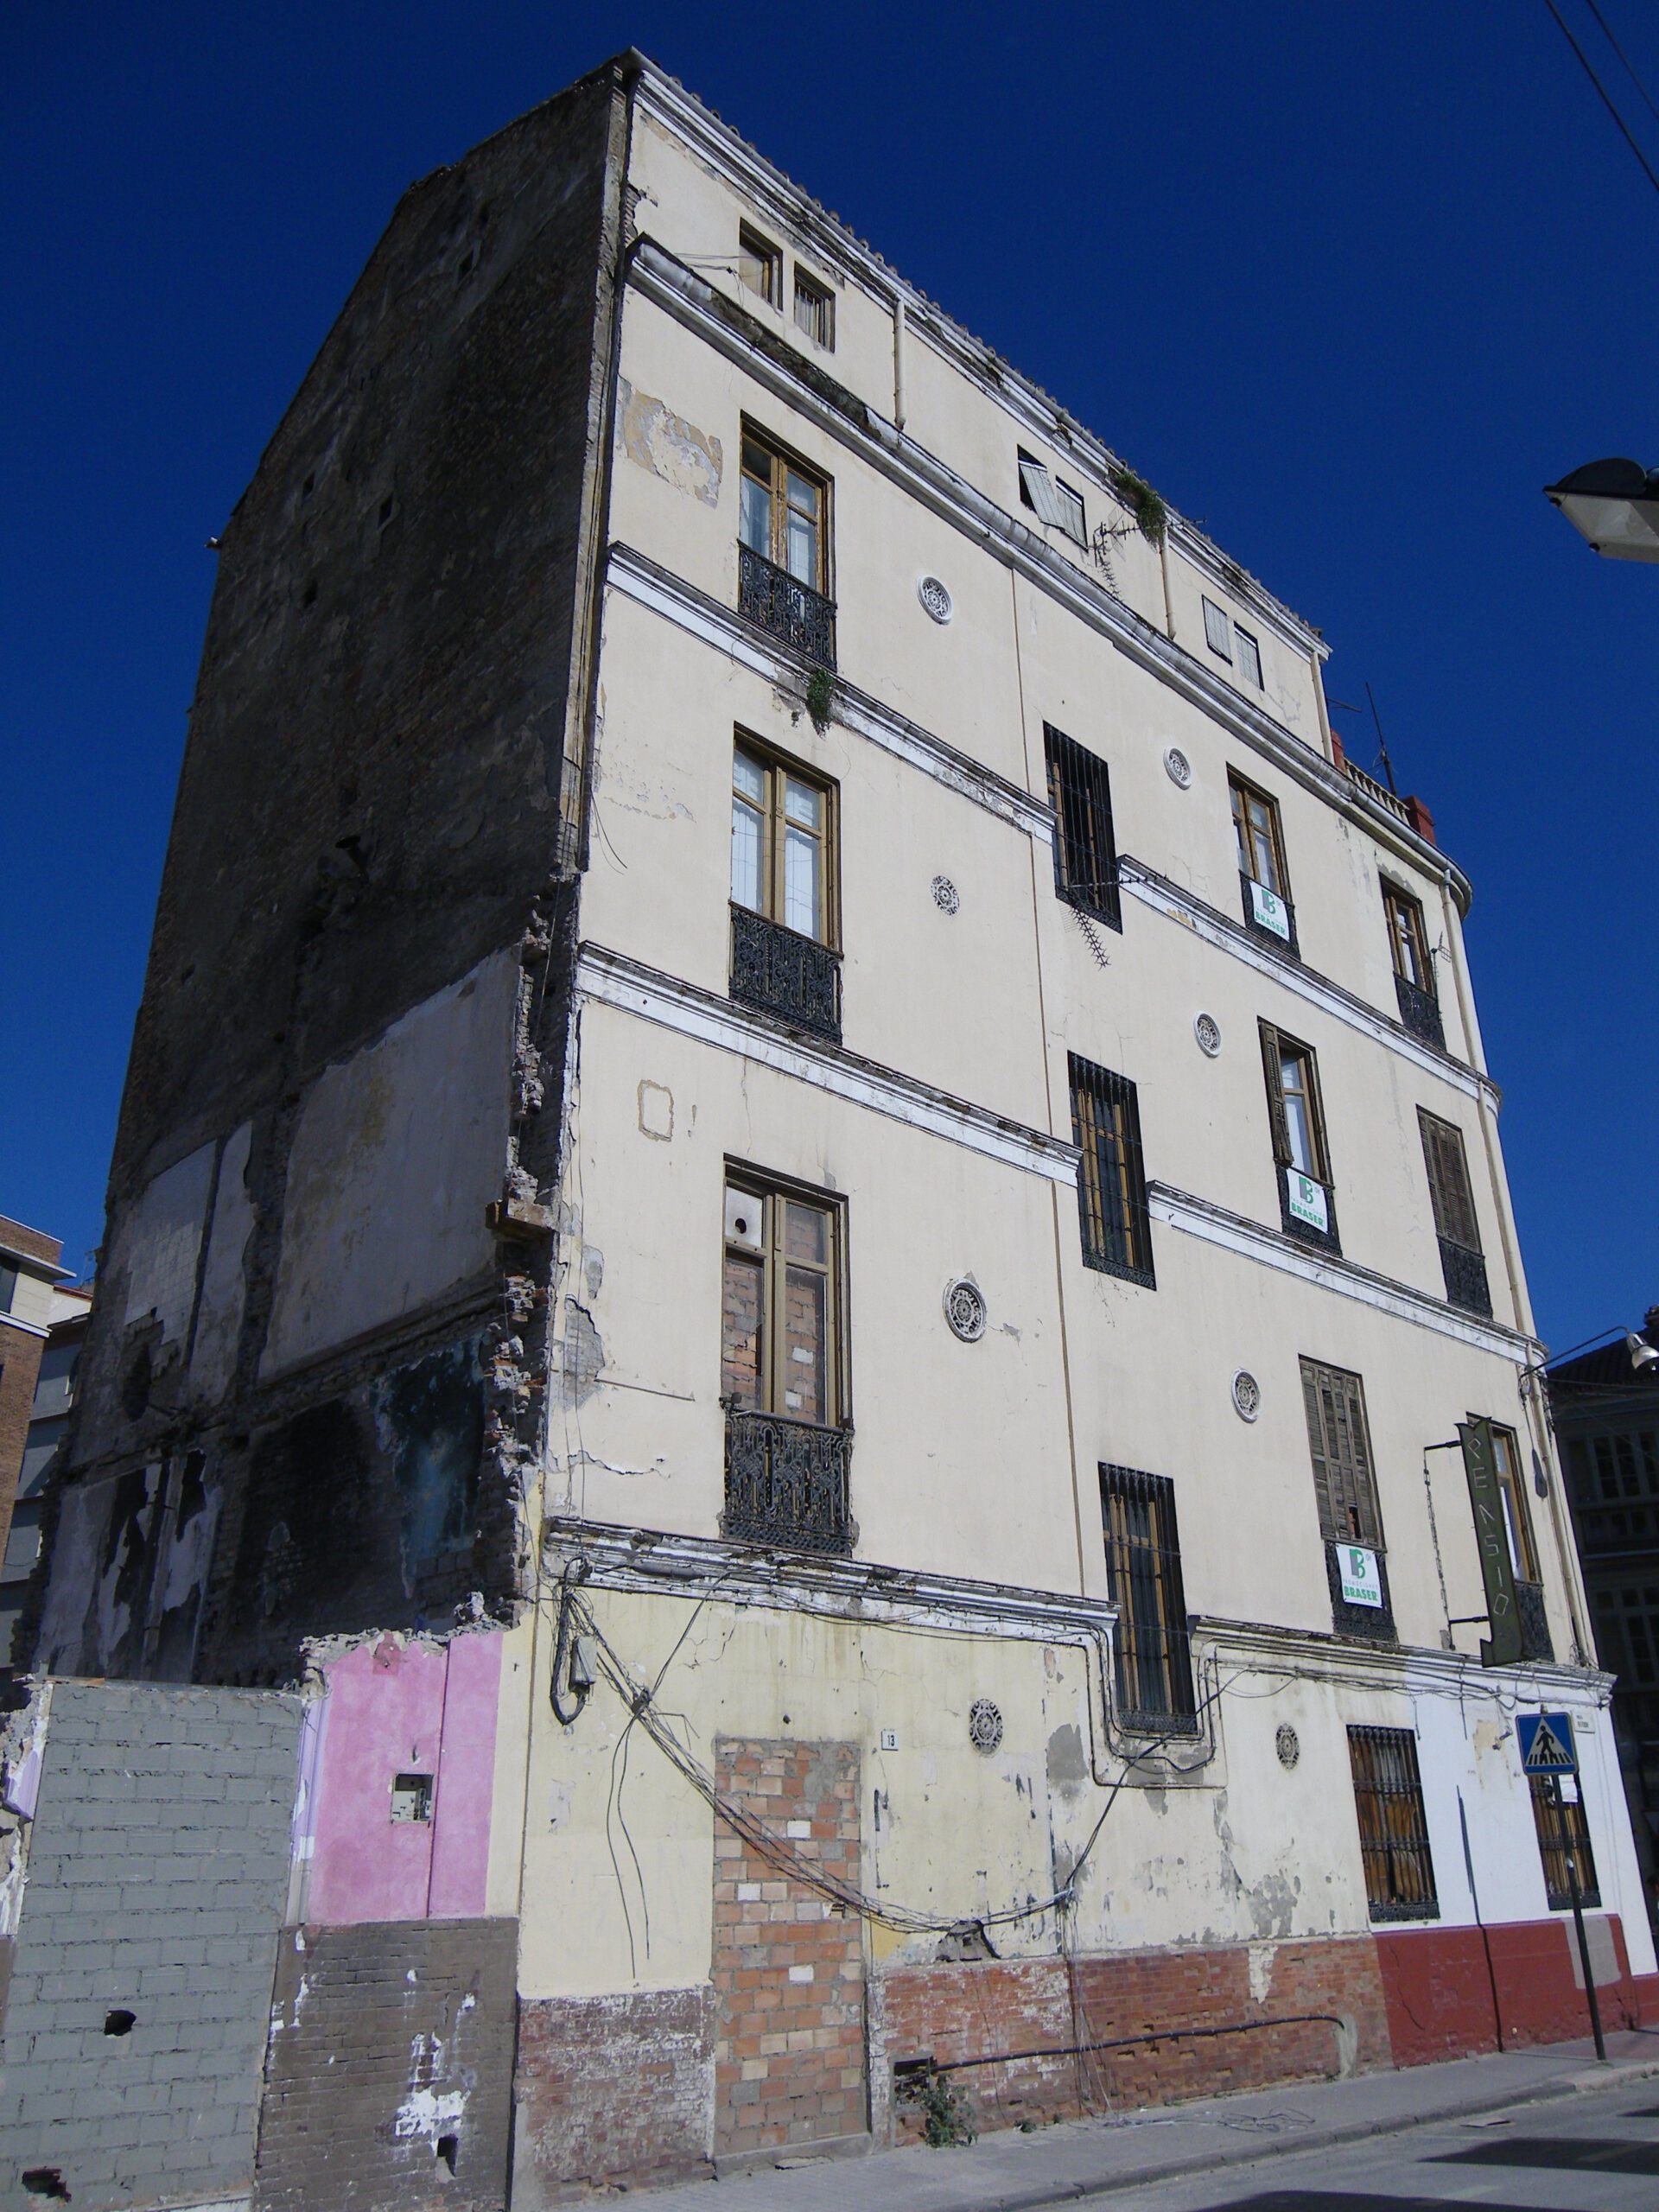 Casa para Isabel Loring Heredia, fachada trasera, oeste, hacia Pasillo de Atocha, 5 de mayo de 2010.